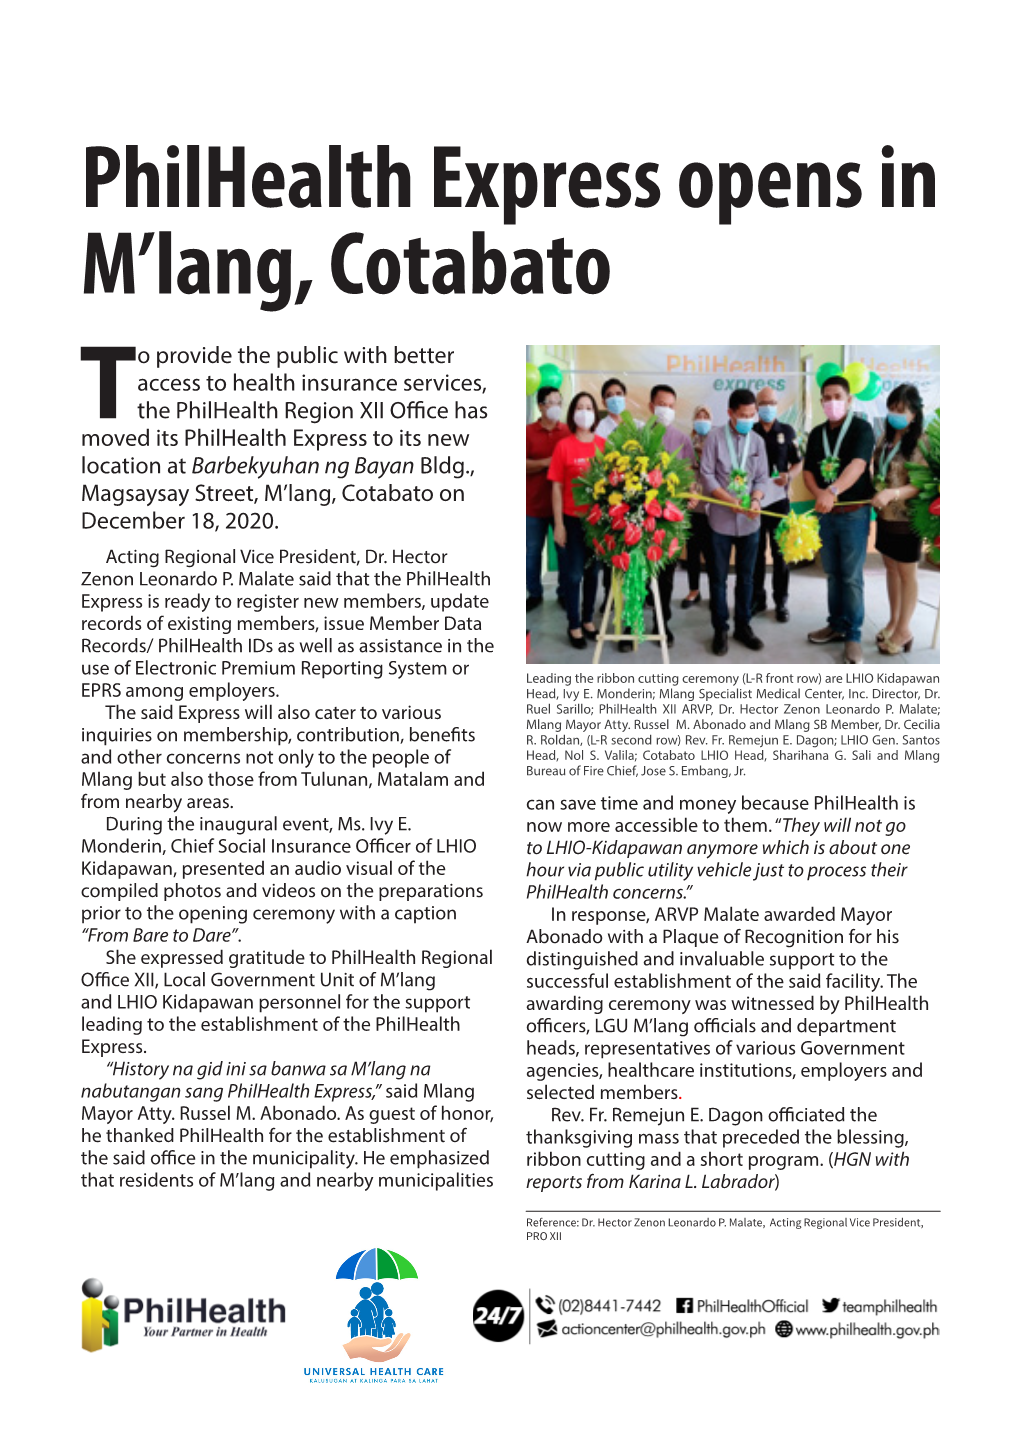 Philhealth Express Opens in M'lang, Cotabato